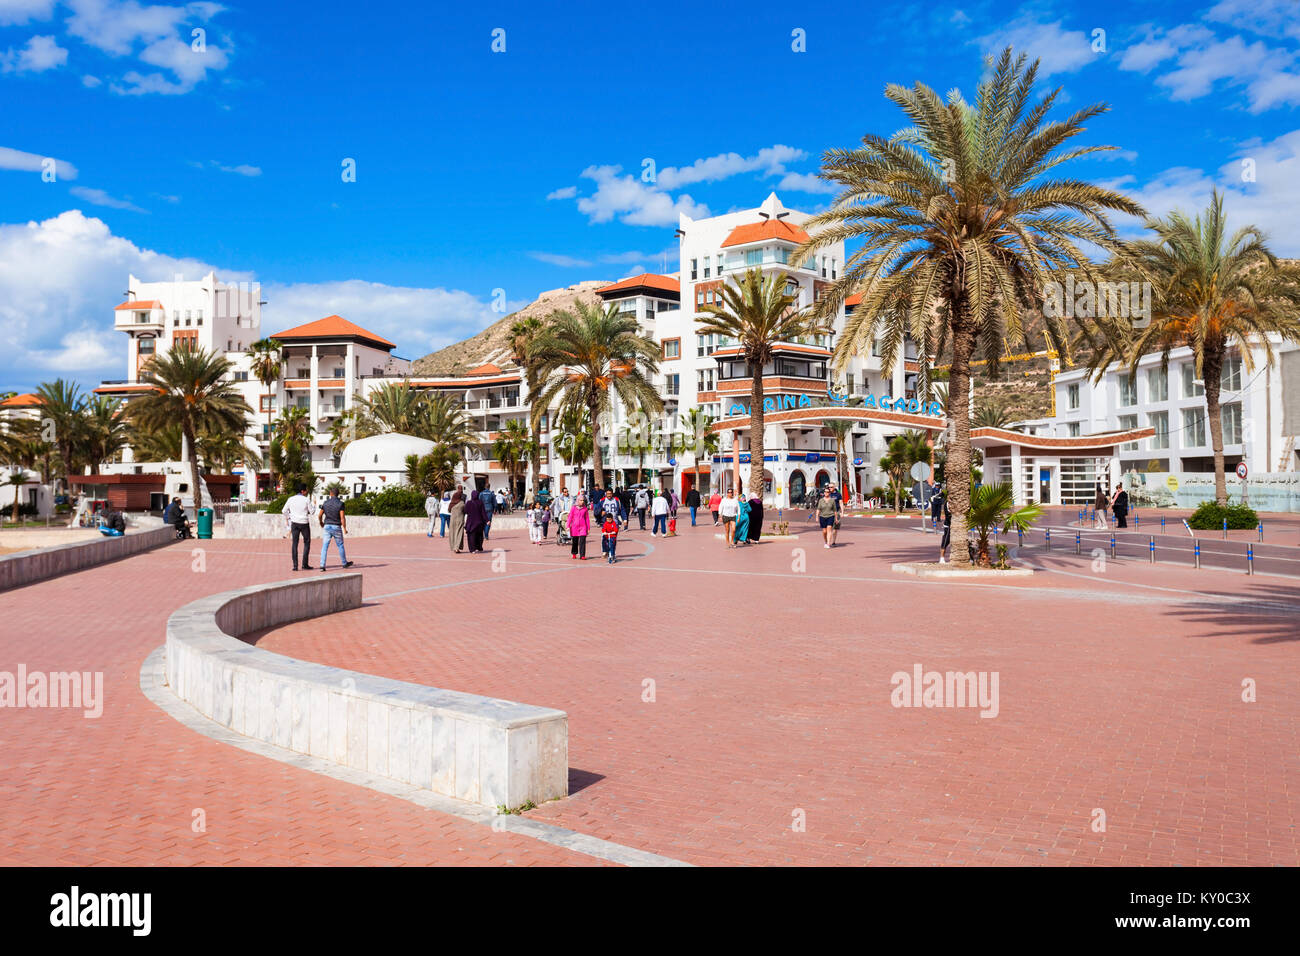 AGADIR, MOROCCO - FEBRUARY 21, 2016: Agadir seafront promenade in Morocco.  Agadir is a major city in Morocco located on the shore of the Atlantic Ocea  Stock Photo - Alamy